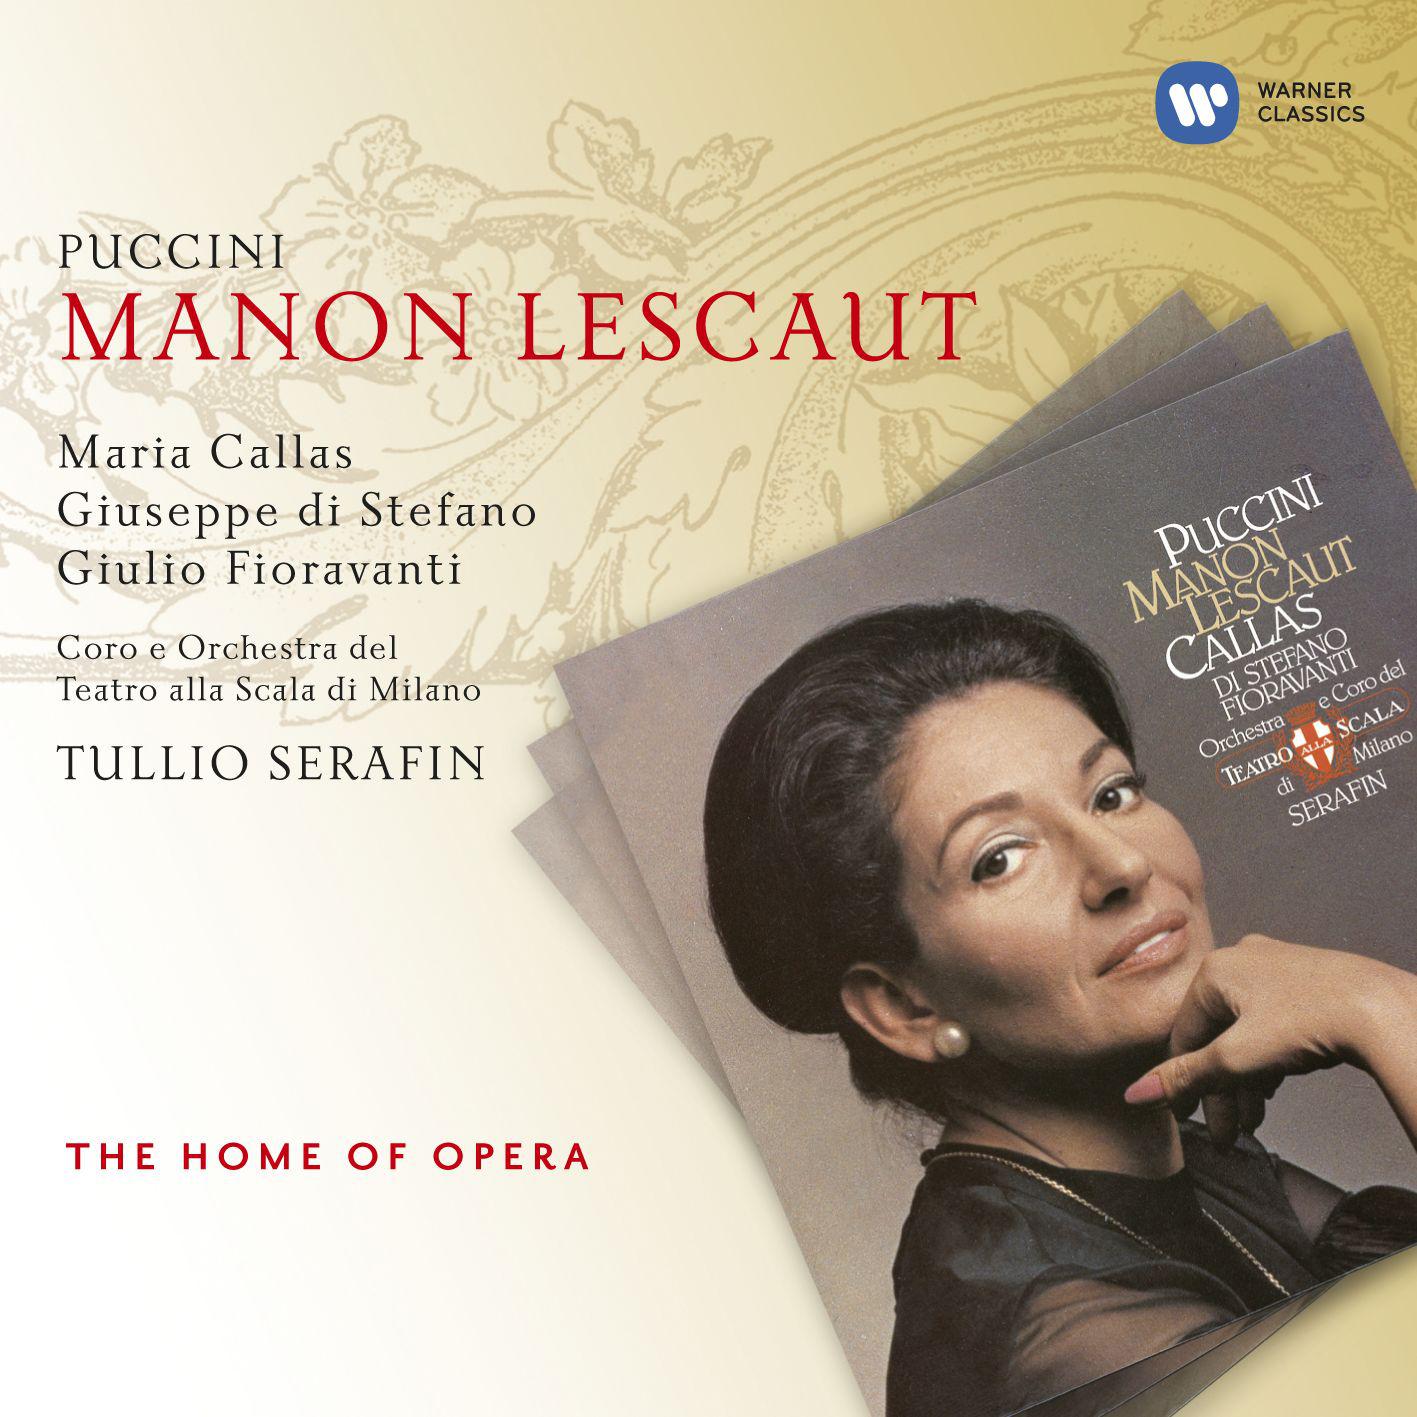 Maria Callas/Franco Calabrese/Giuseppe di Stefano/Orchestra del Teatro alla Scala, Milano/Tullio Serafin - Manon Lescaut (1997 Remastered Version), Act II:Ah! ... Affè madamigella (Manon/Geronte/Des Grieux)